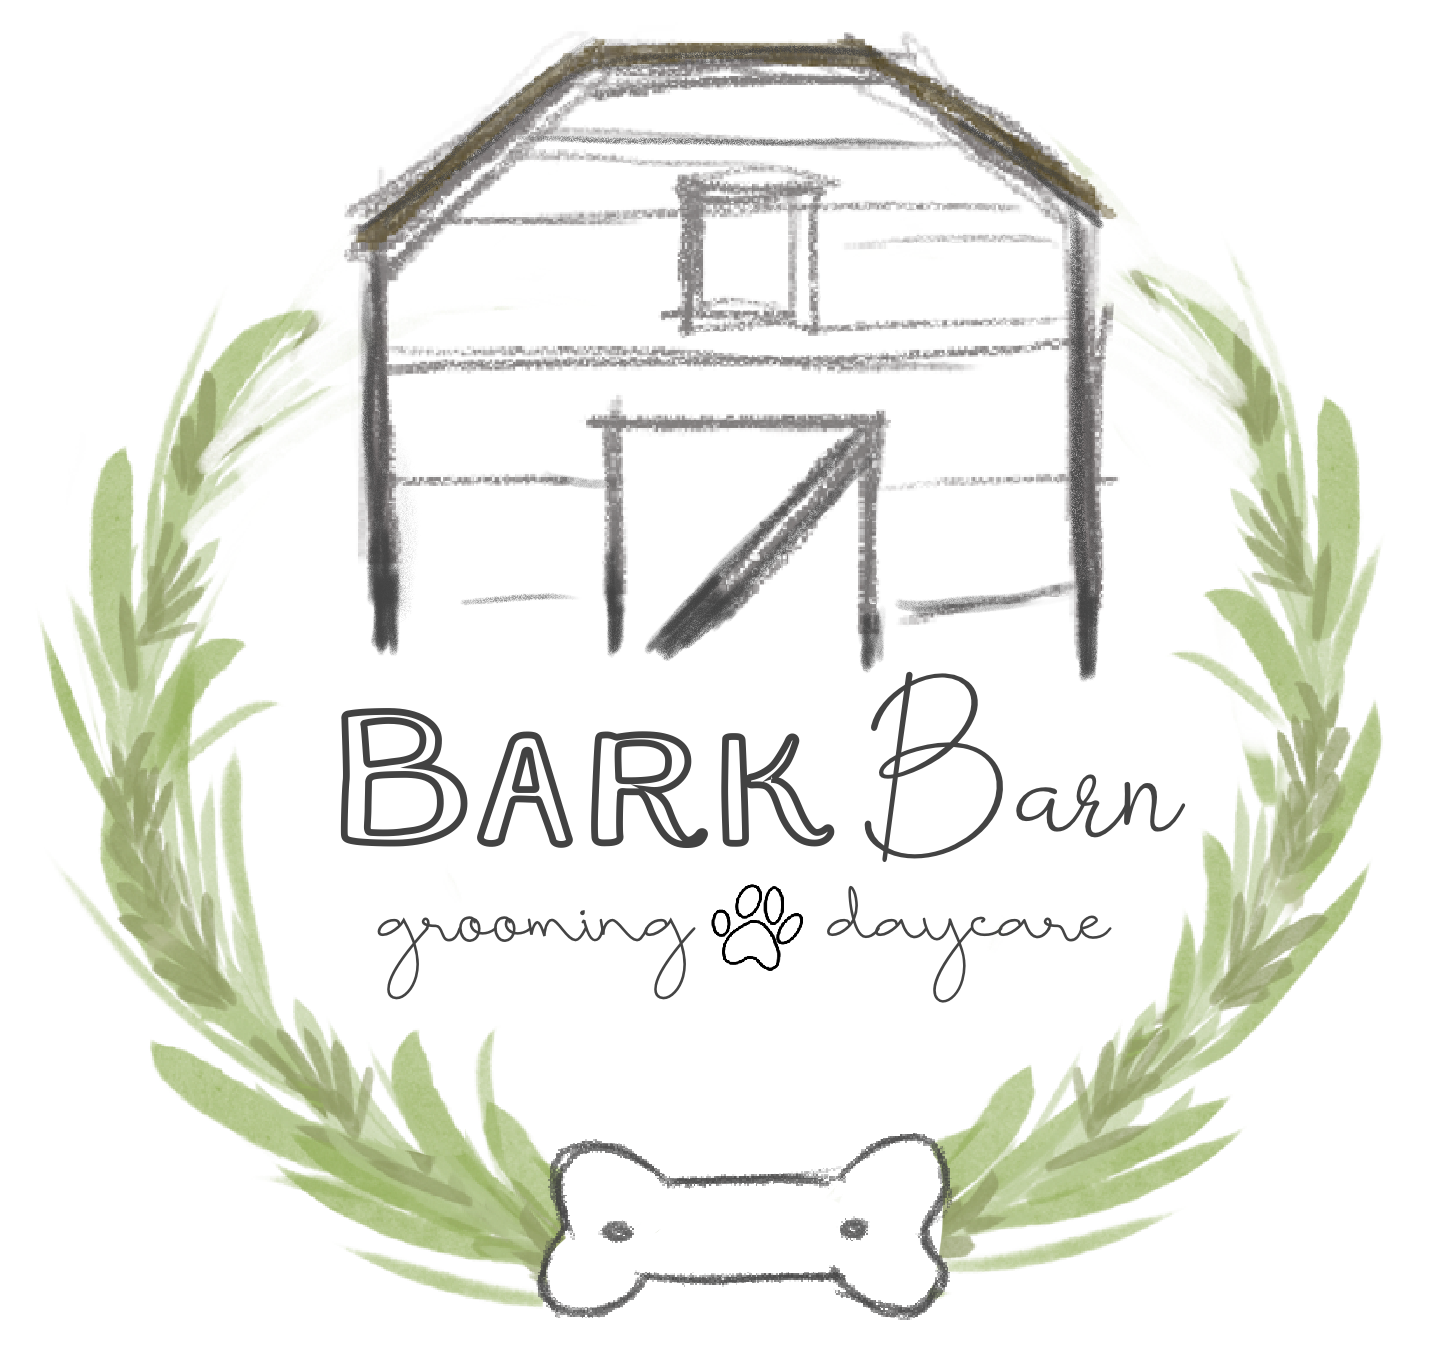 Bark Barn